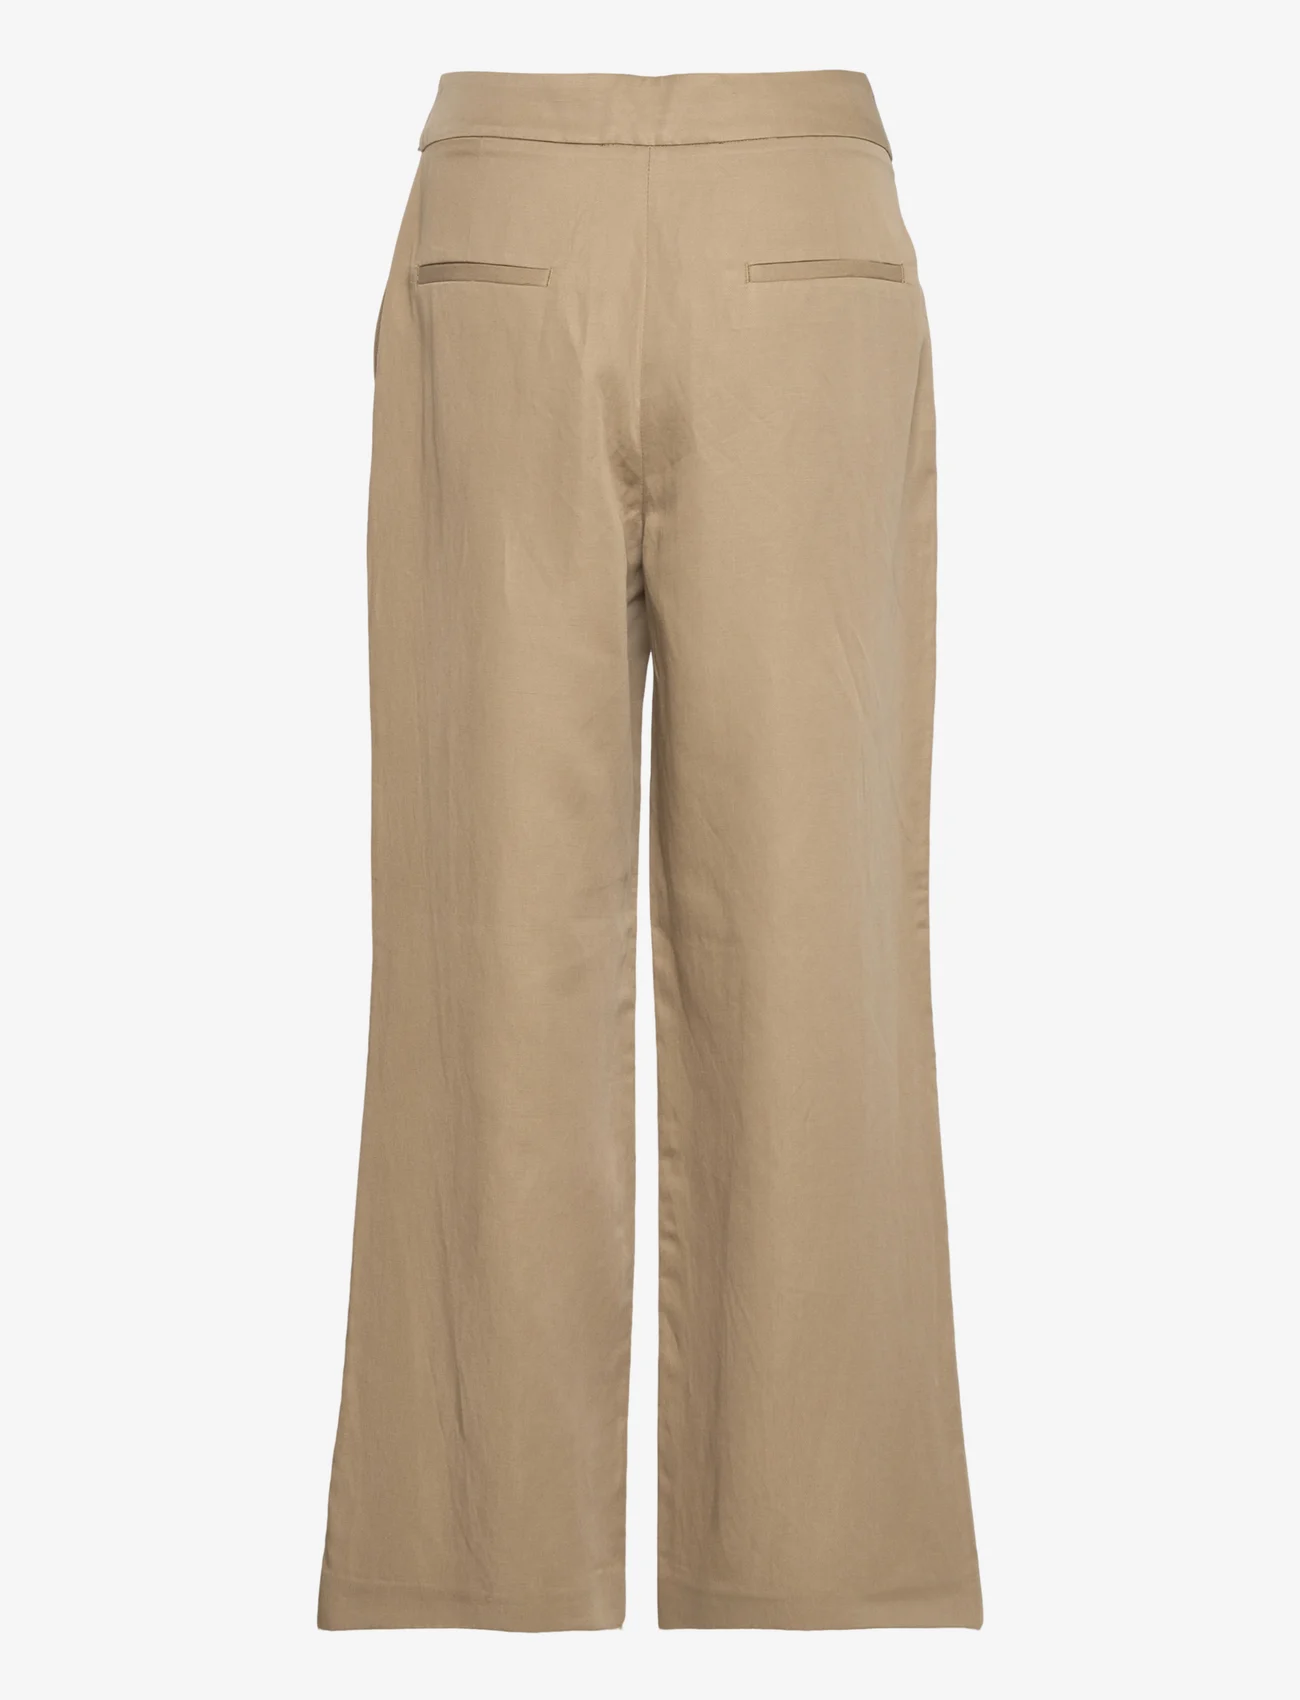 Esprit Collection - Women Pants woven length service - vida byxor - khaki green - 1